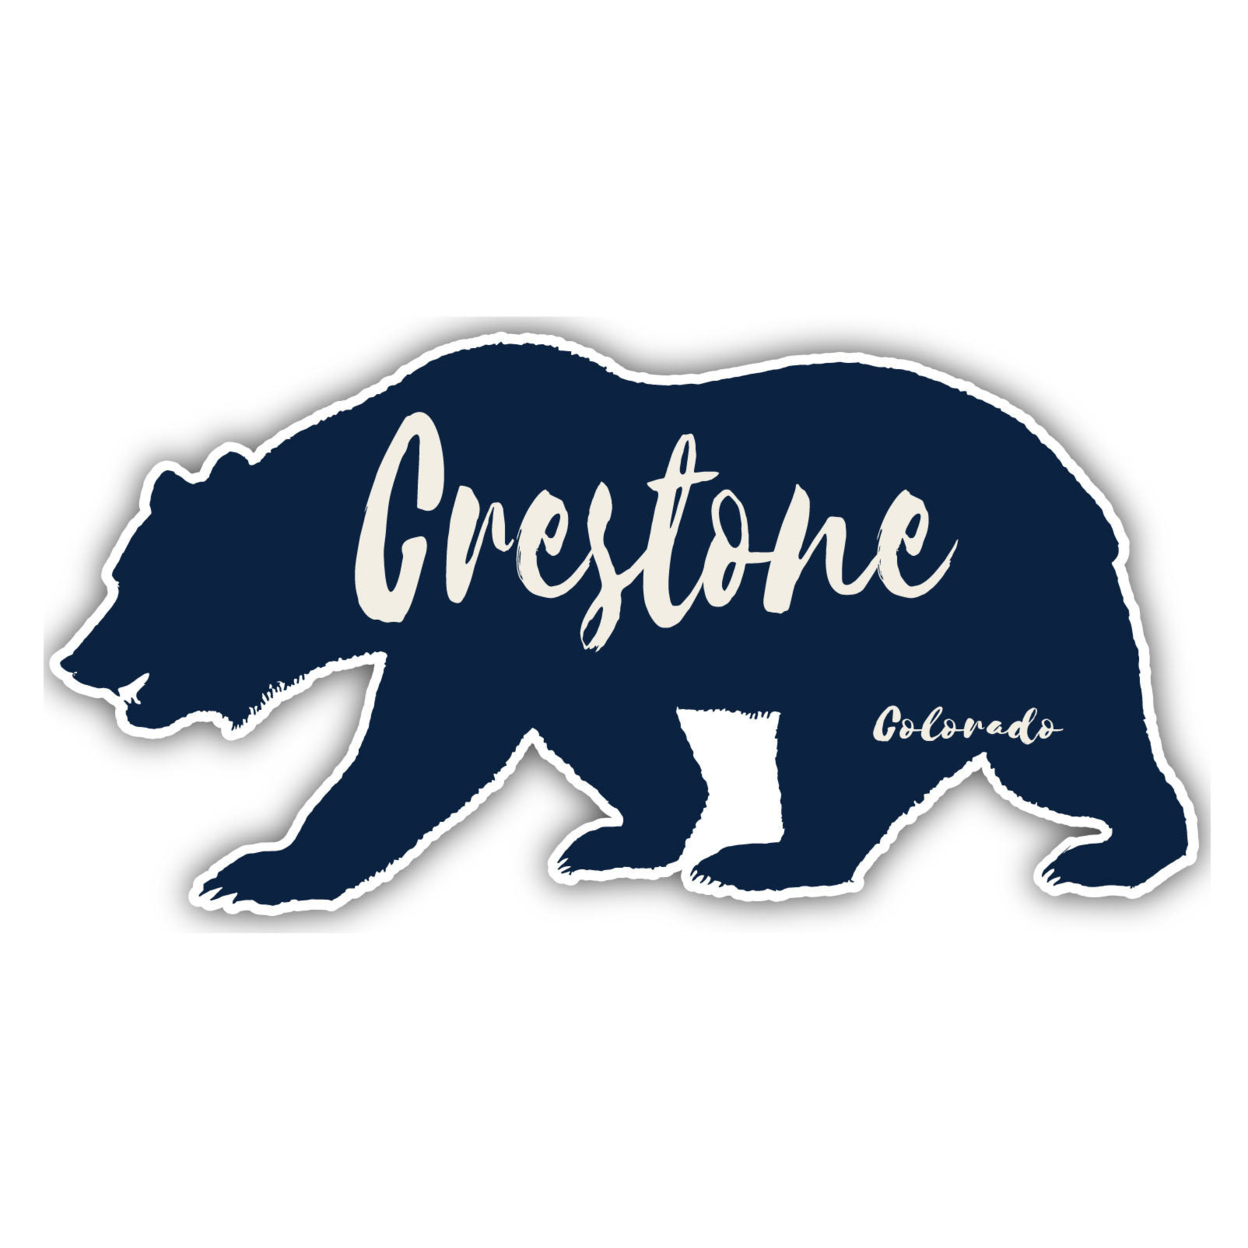 Crestone Colorado Souvenir Decorative Stickers (Choose Theme And Size) - 4-Pack, 10-Inch, Camp Life